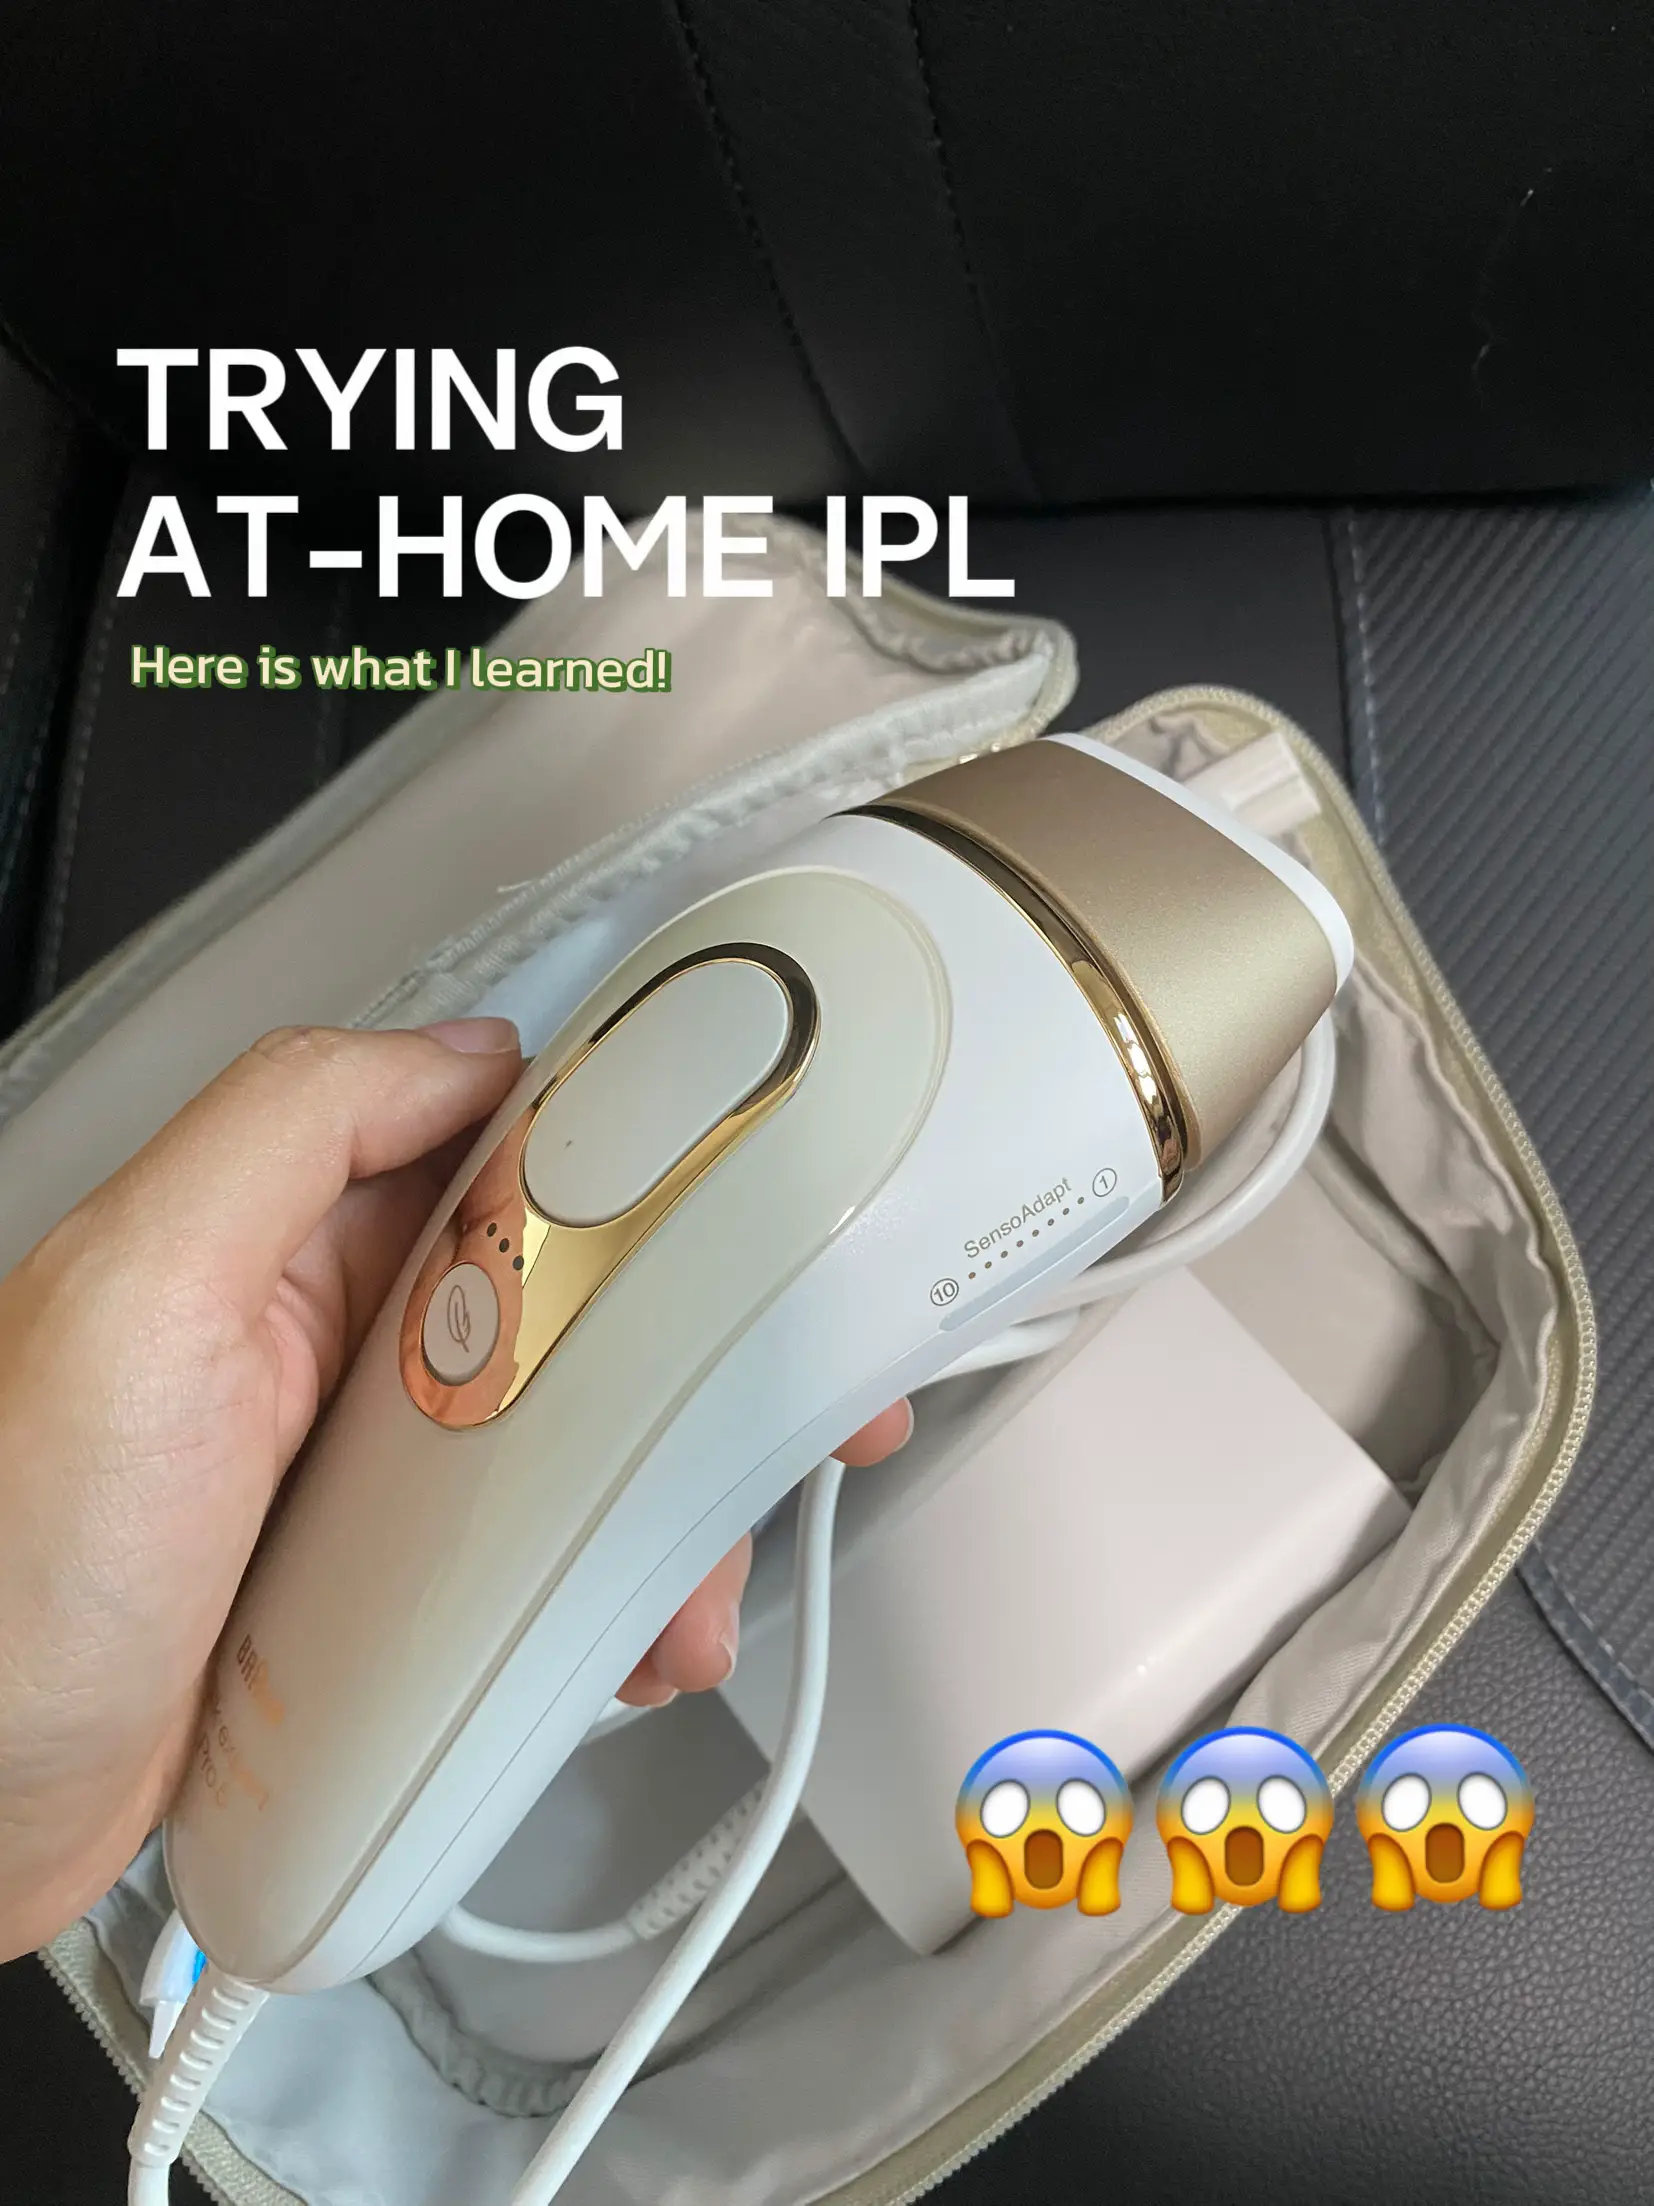 Braun IPL Silk-expert Pro 5 burnt inside? : r/HairRemoval